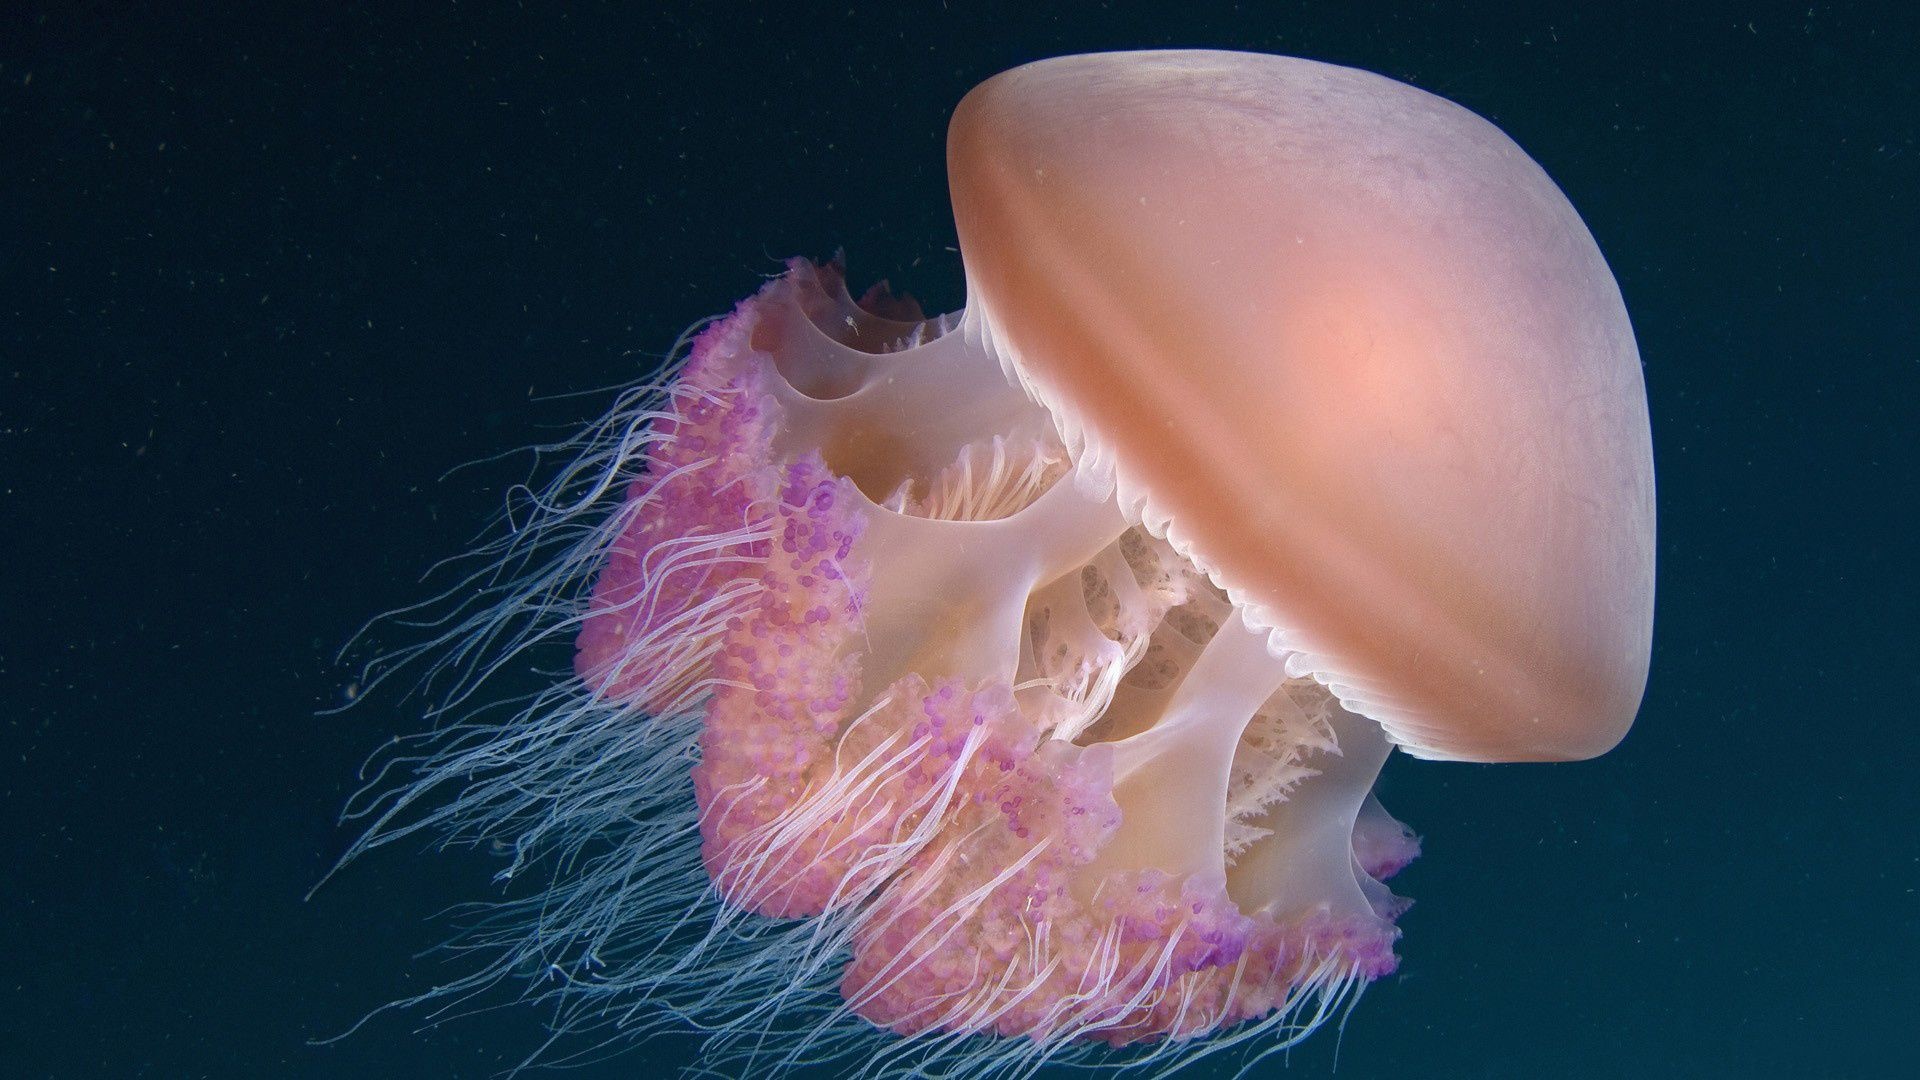 Underwater jellyfish, Oceanic wonders, Deep sea serenity, Captivating marine creatures, 1920x1080 Full HD Desktop